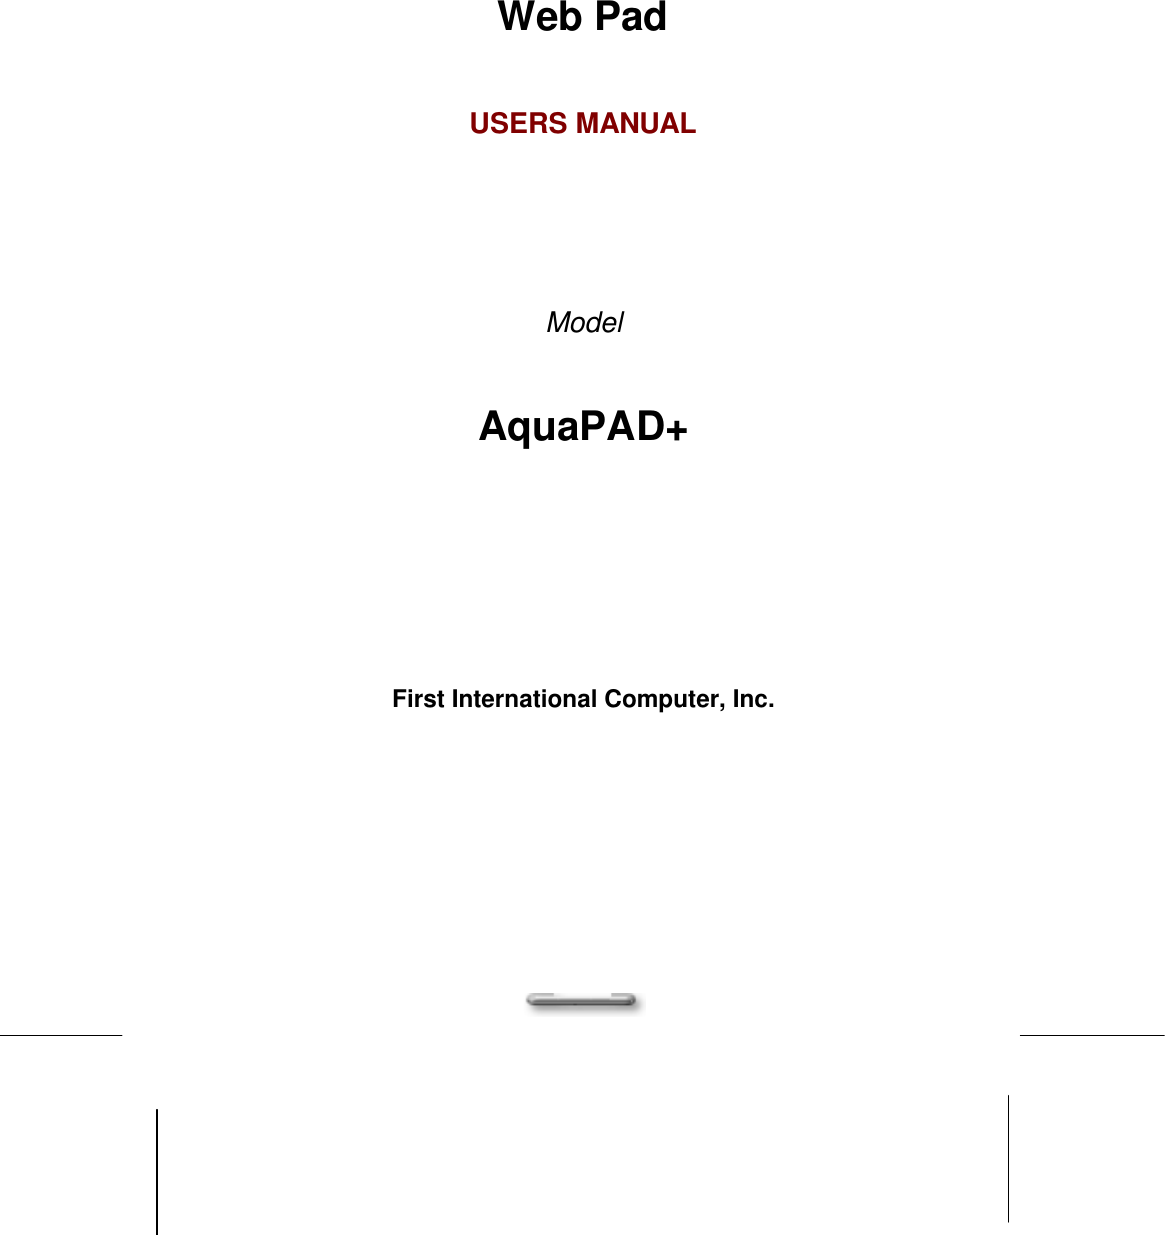   Web Pad  USERS MANUAL    Model  AquaPAD+     First International Computer, Inc.  